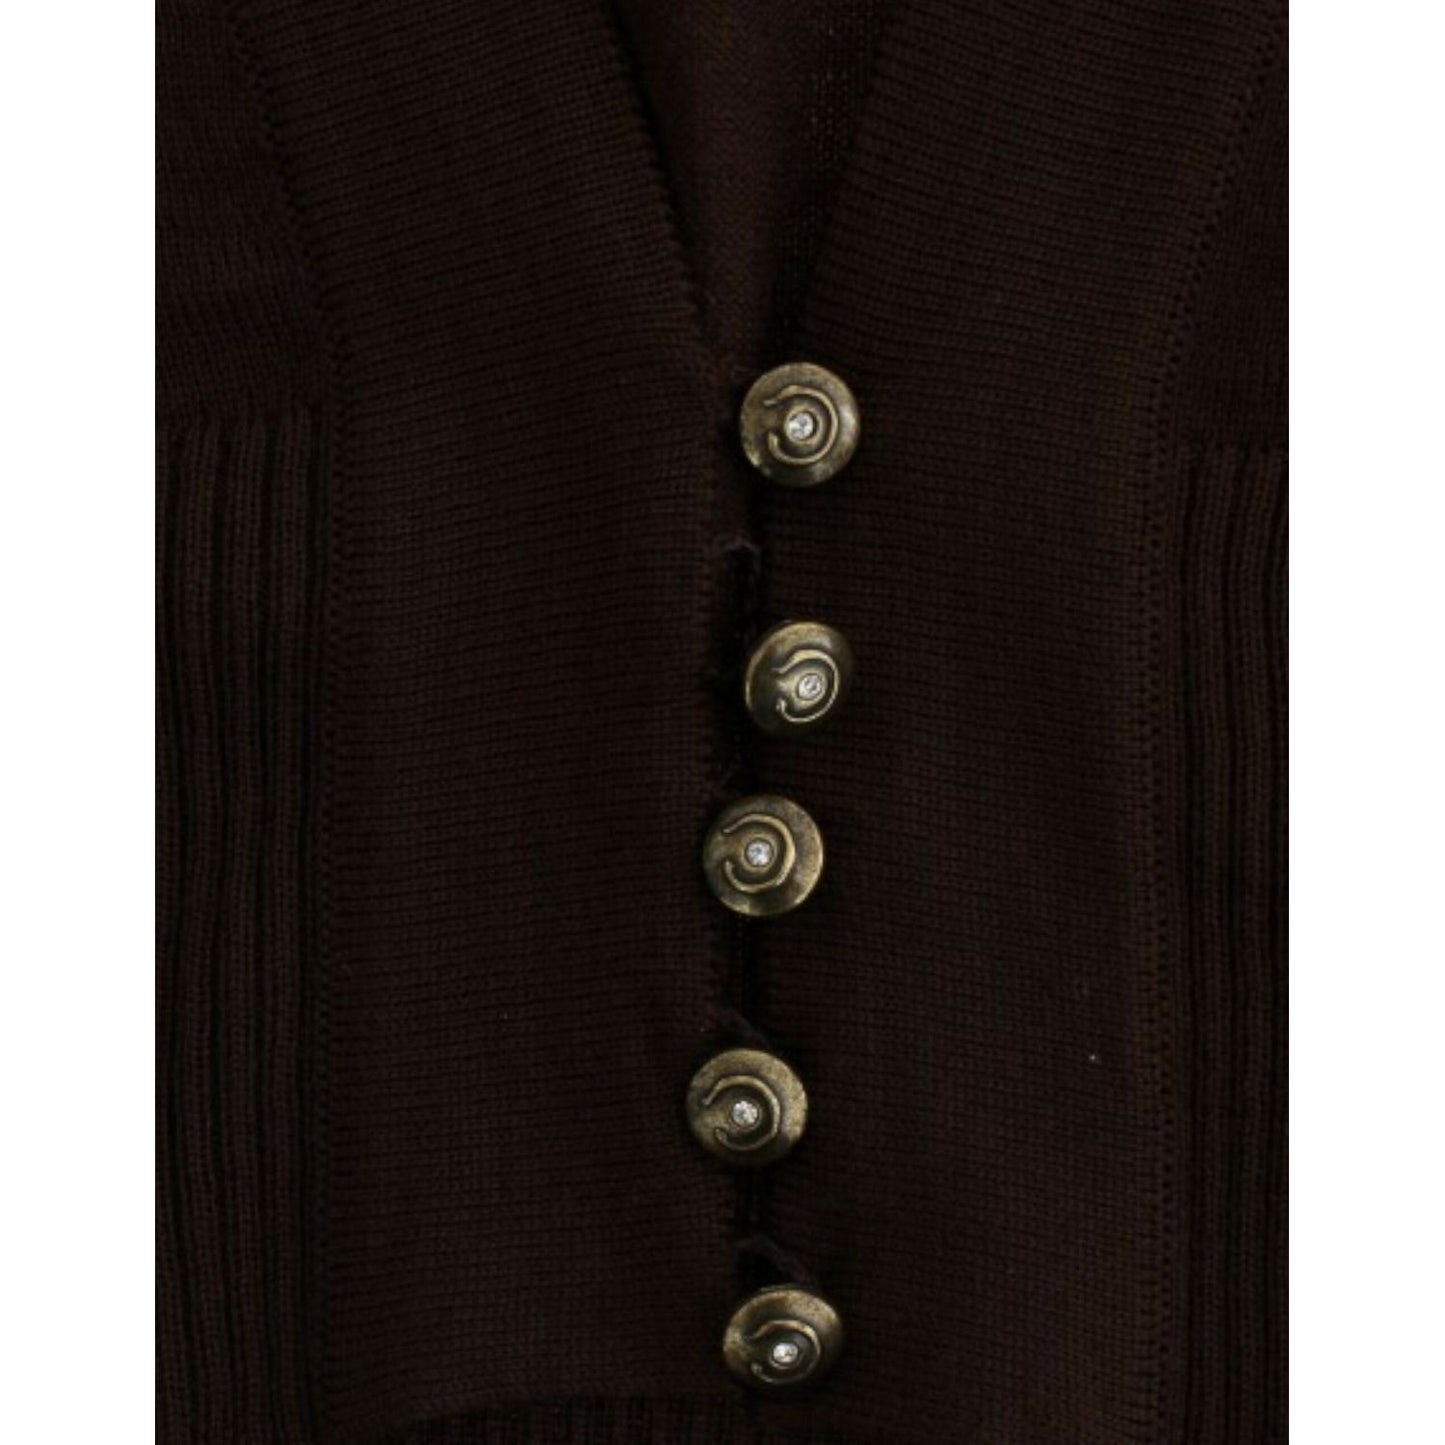 Cavalli Elegant Brown Virgin Wool Cropped Cardigan brown-cropped-wool-cardigan 8983-brown-cropped-wool-cardigan-6-scaled-e17dc83e-815.jpg